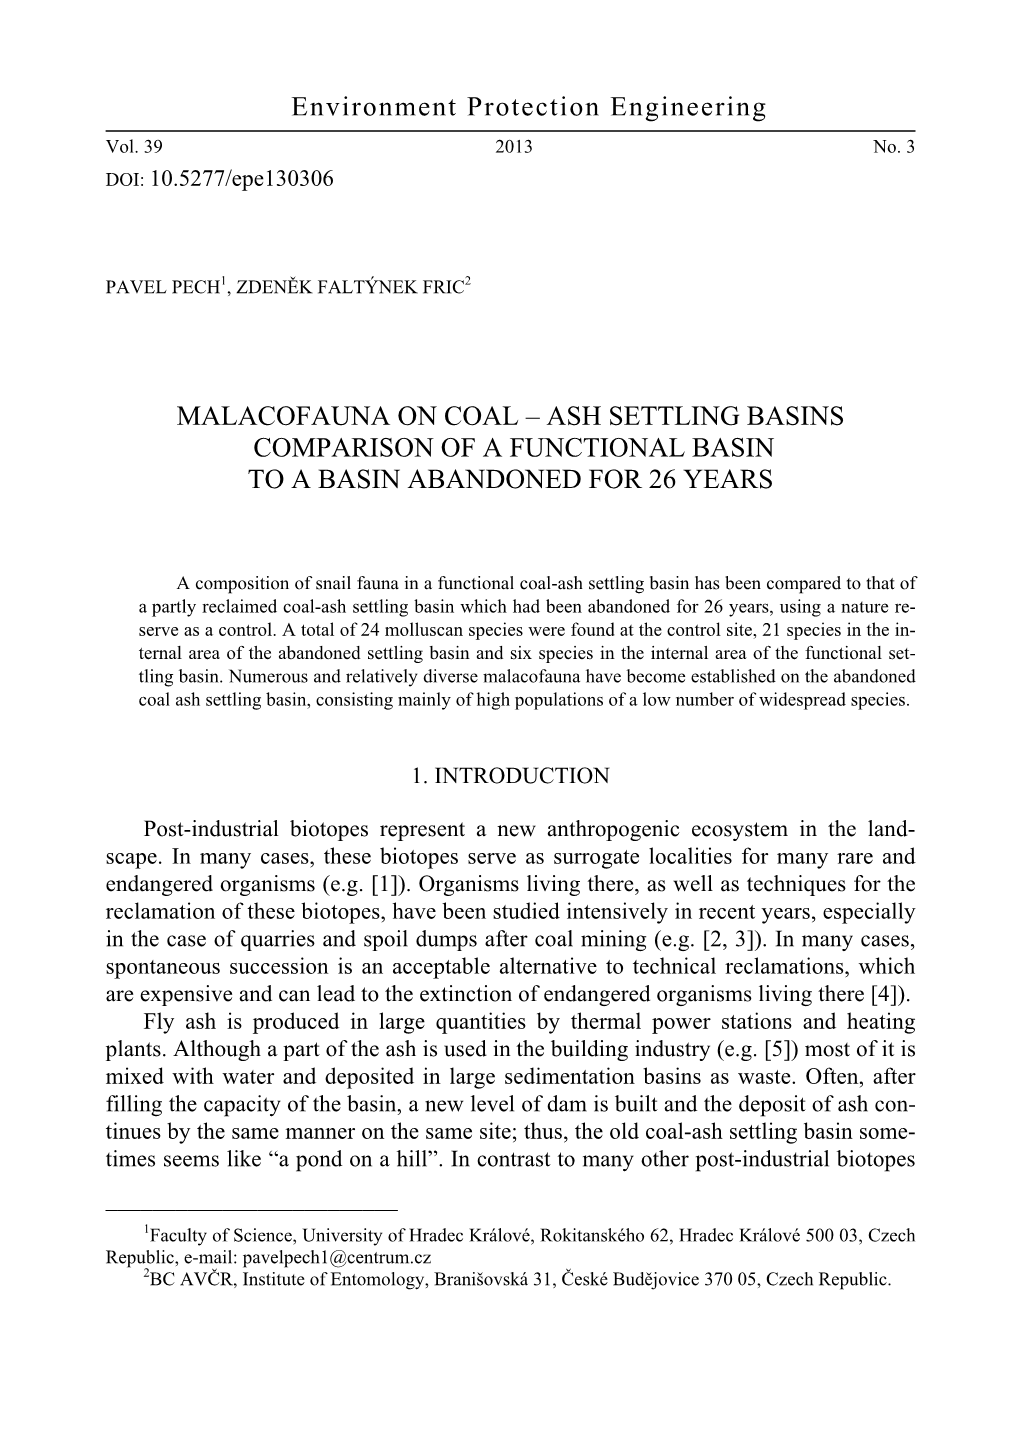 Malacofauna on Coal – Ash Settling Basins Comparison of a Functional Basin to a Basin Abandoned for 26 Years